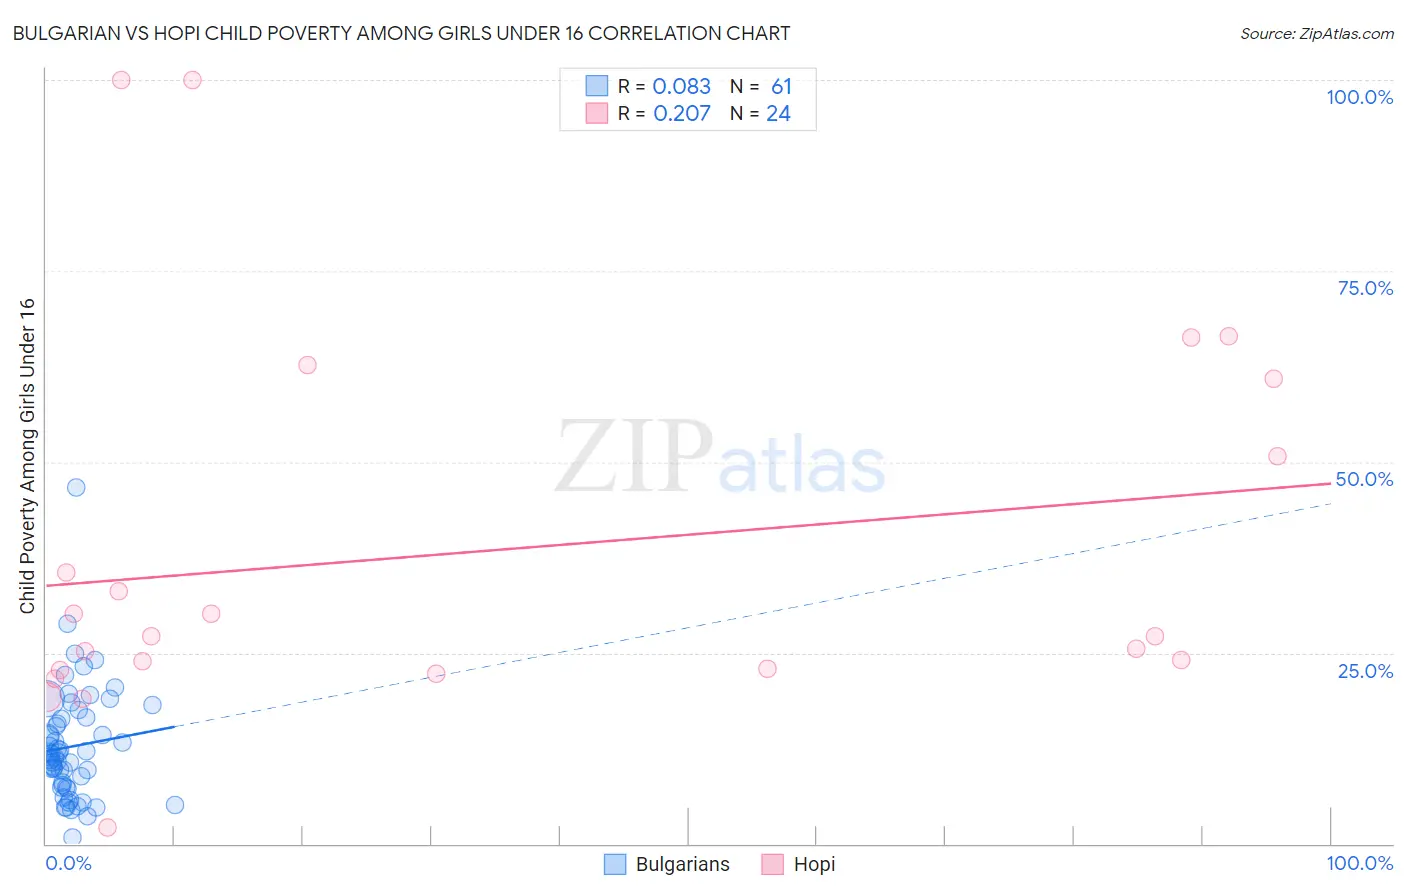 Bulgarian vs Hopi Child Poverty Among Girls Under 16